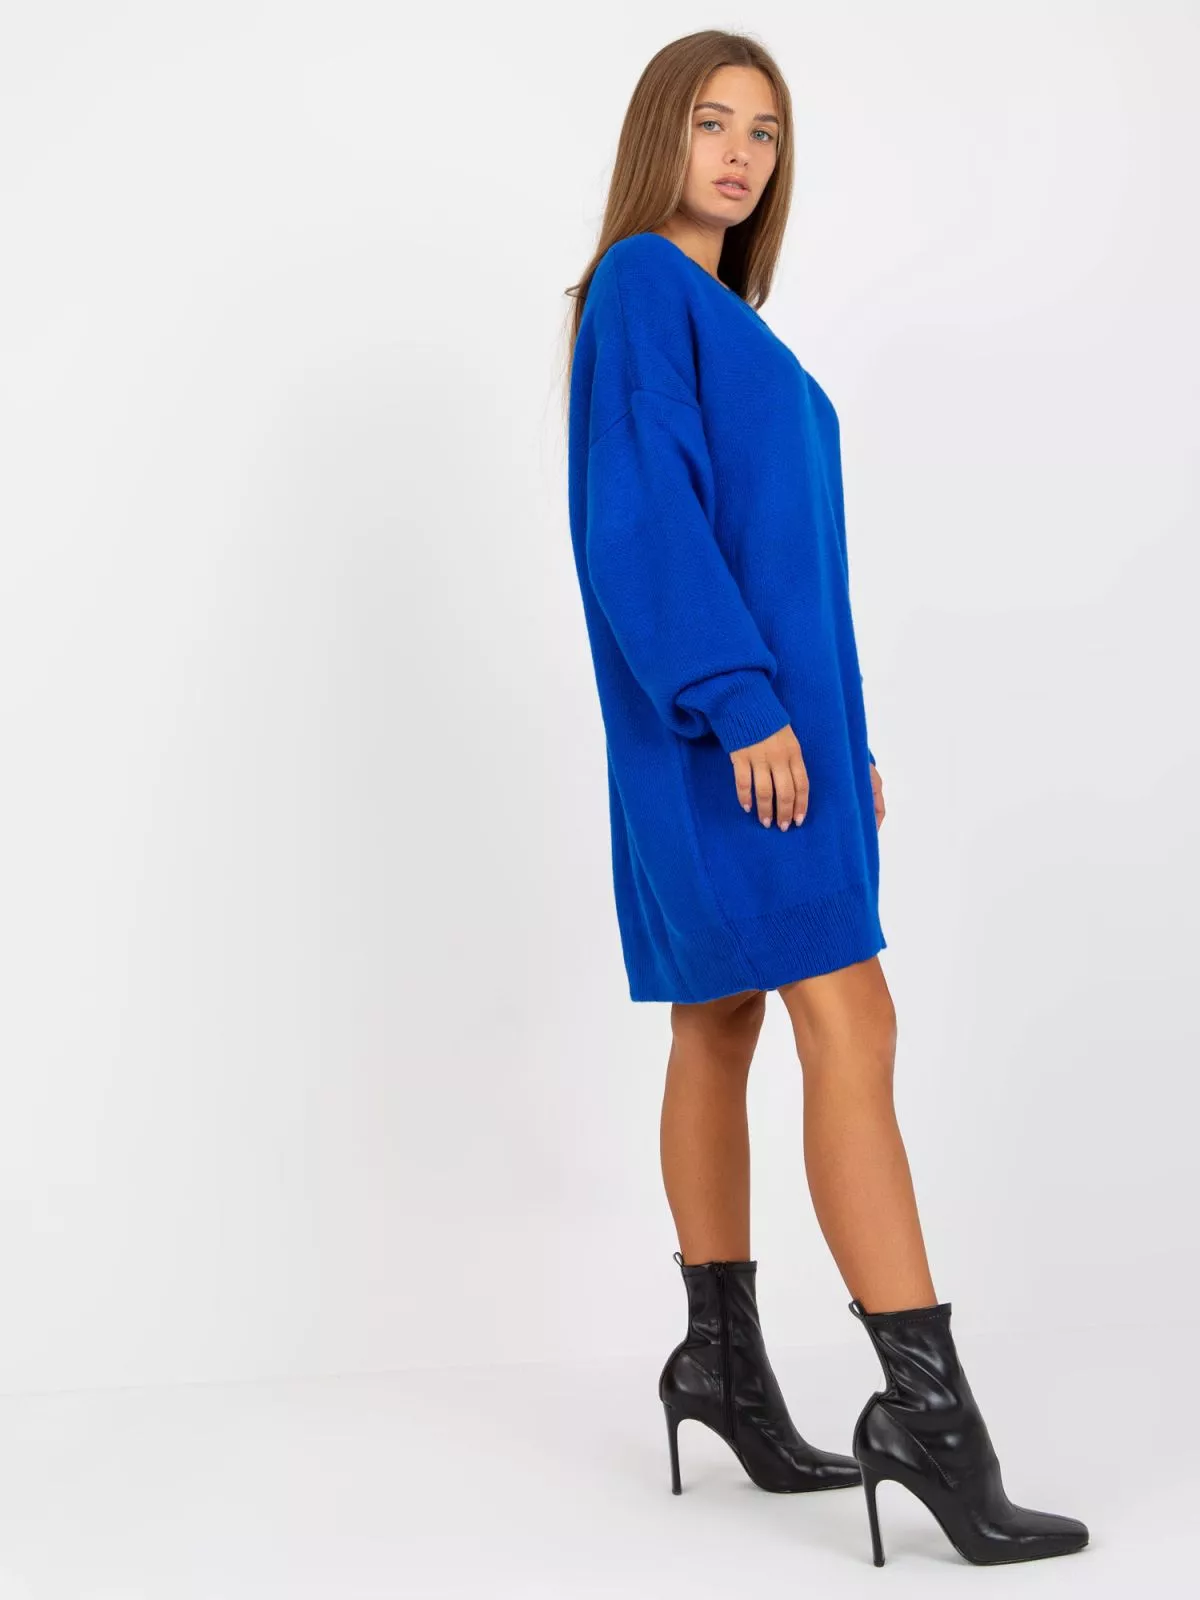 Pulover dama tricotat albastru - pulovere